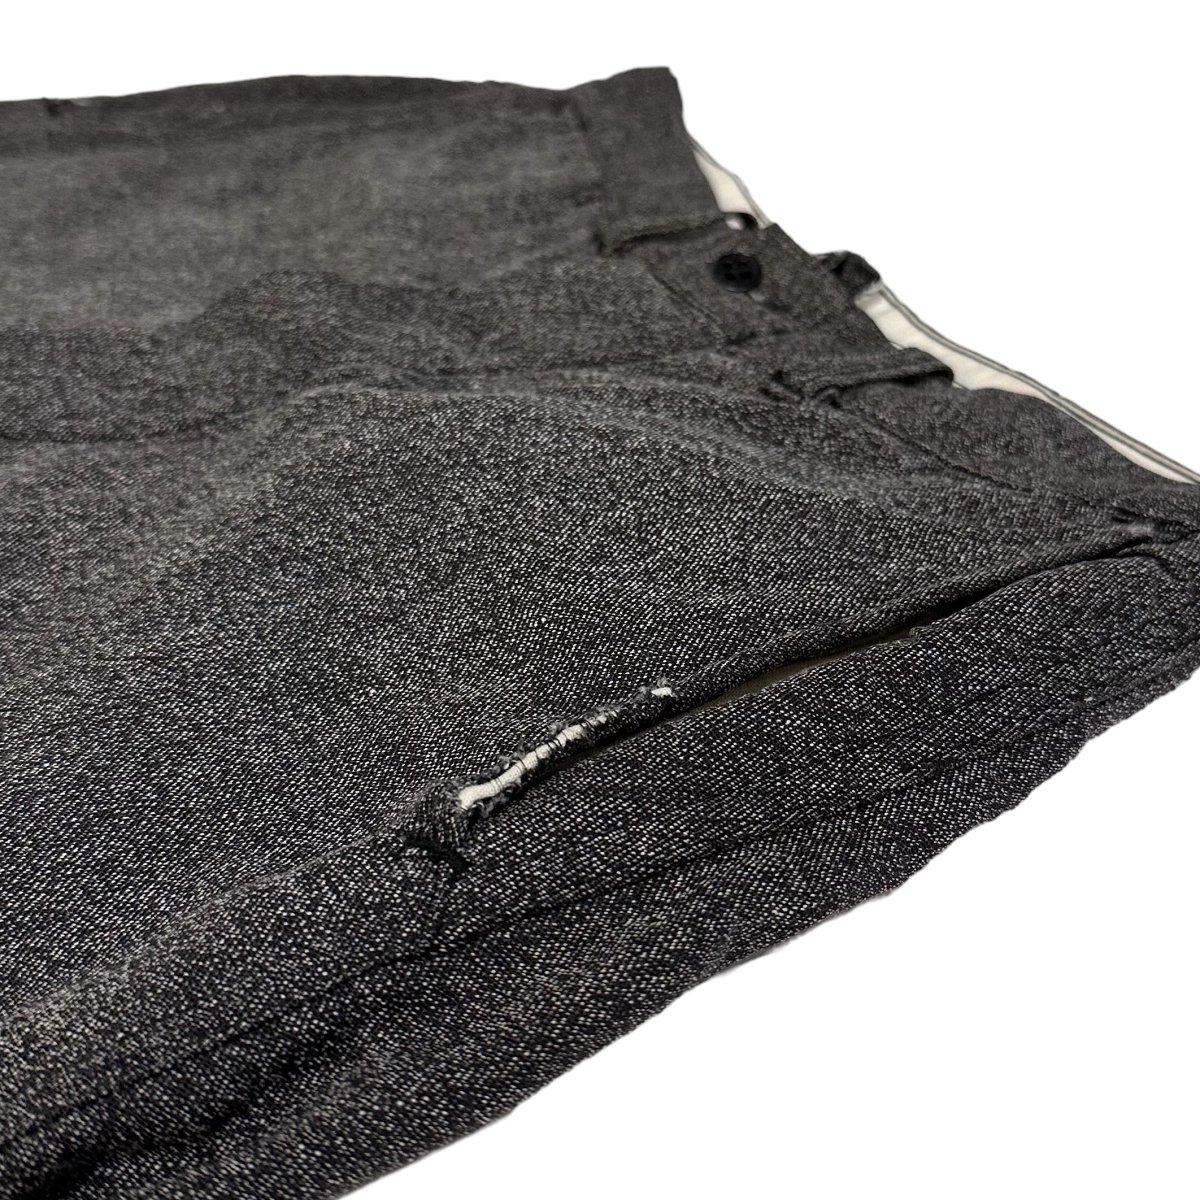 40s~50s Vintage Black Chambray Work Pants 黒 W31×L30 ブラックシャンブレー ワークパンツ 黒シャン  ヴィンテージ 古着 - NEWJOKE ONLINE STORE